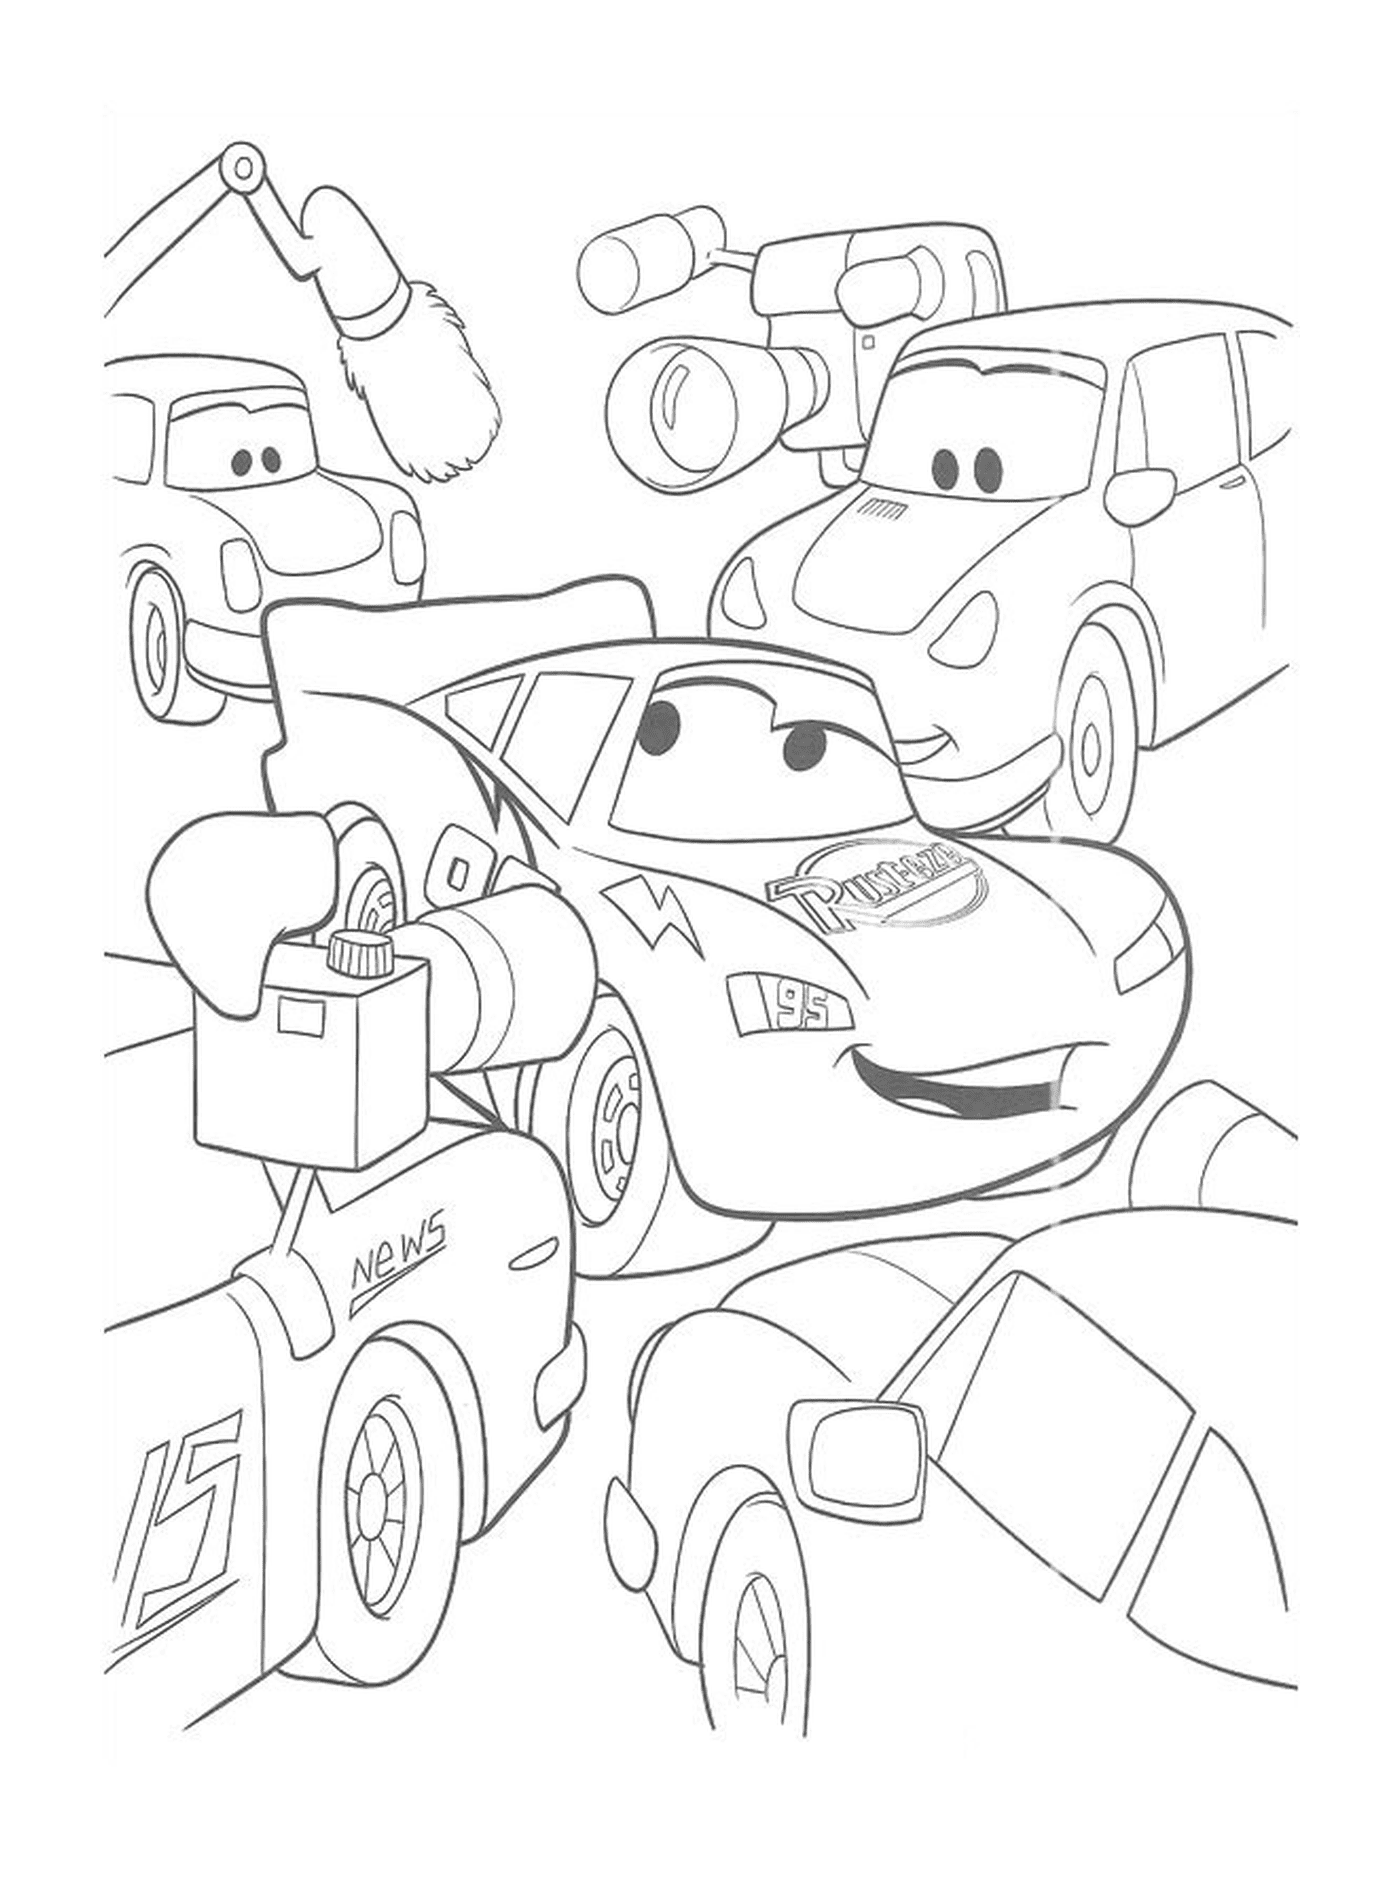  Flash McQueen nos holofotes com outros carros 